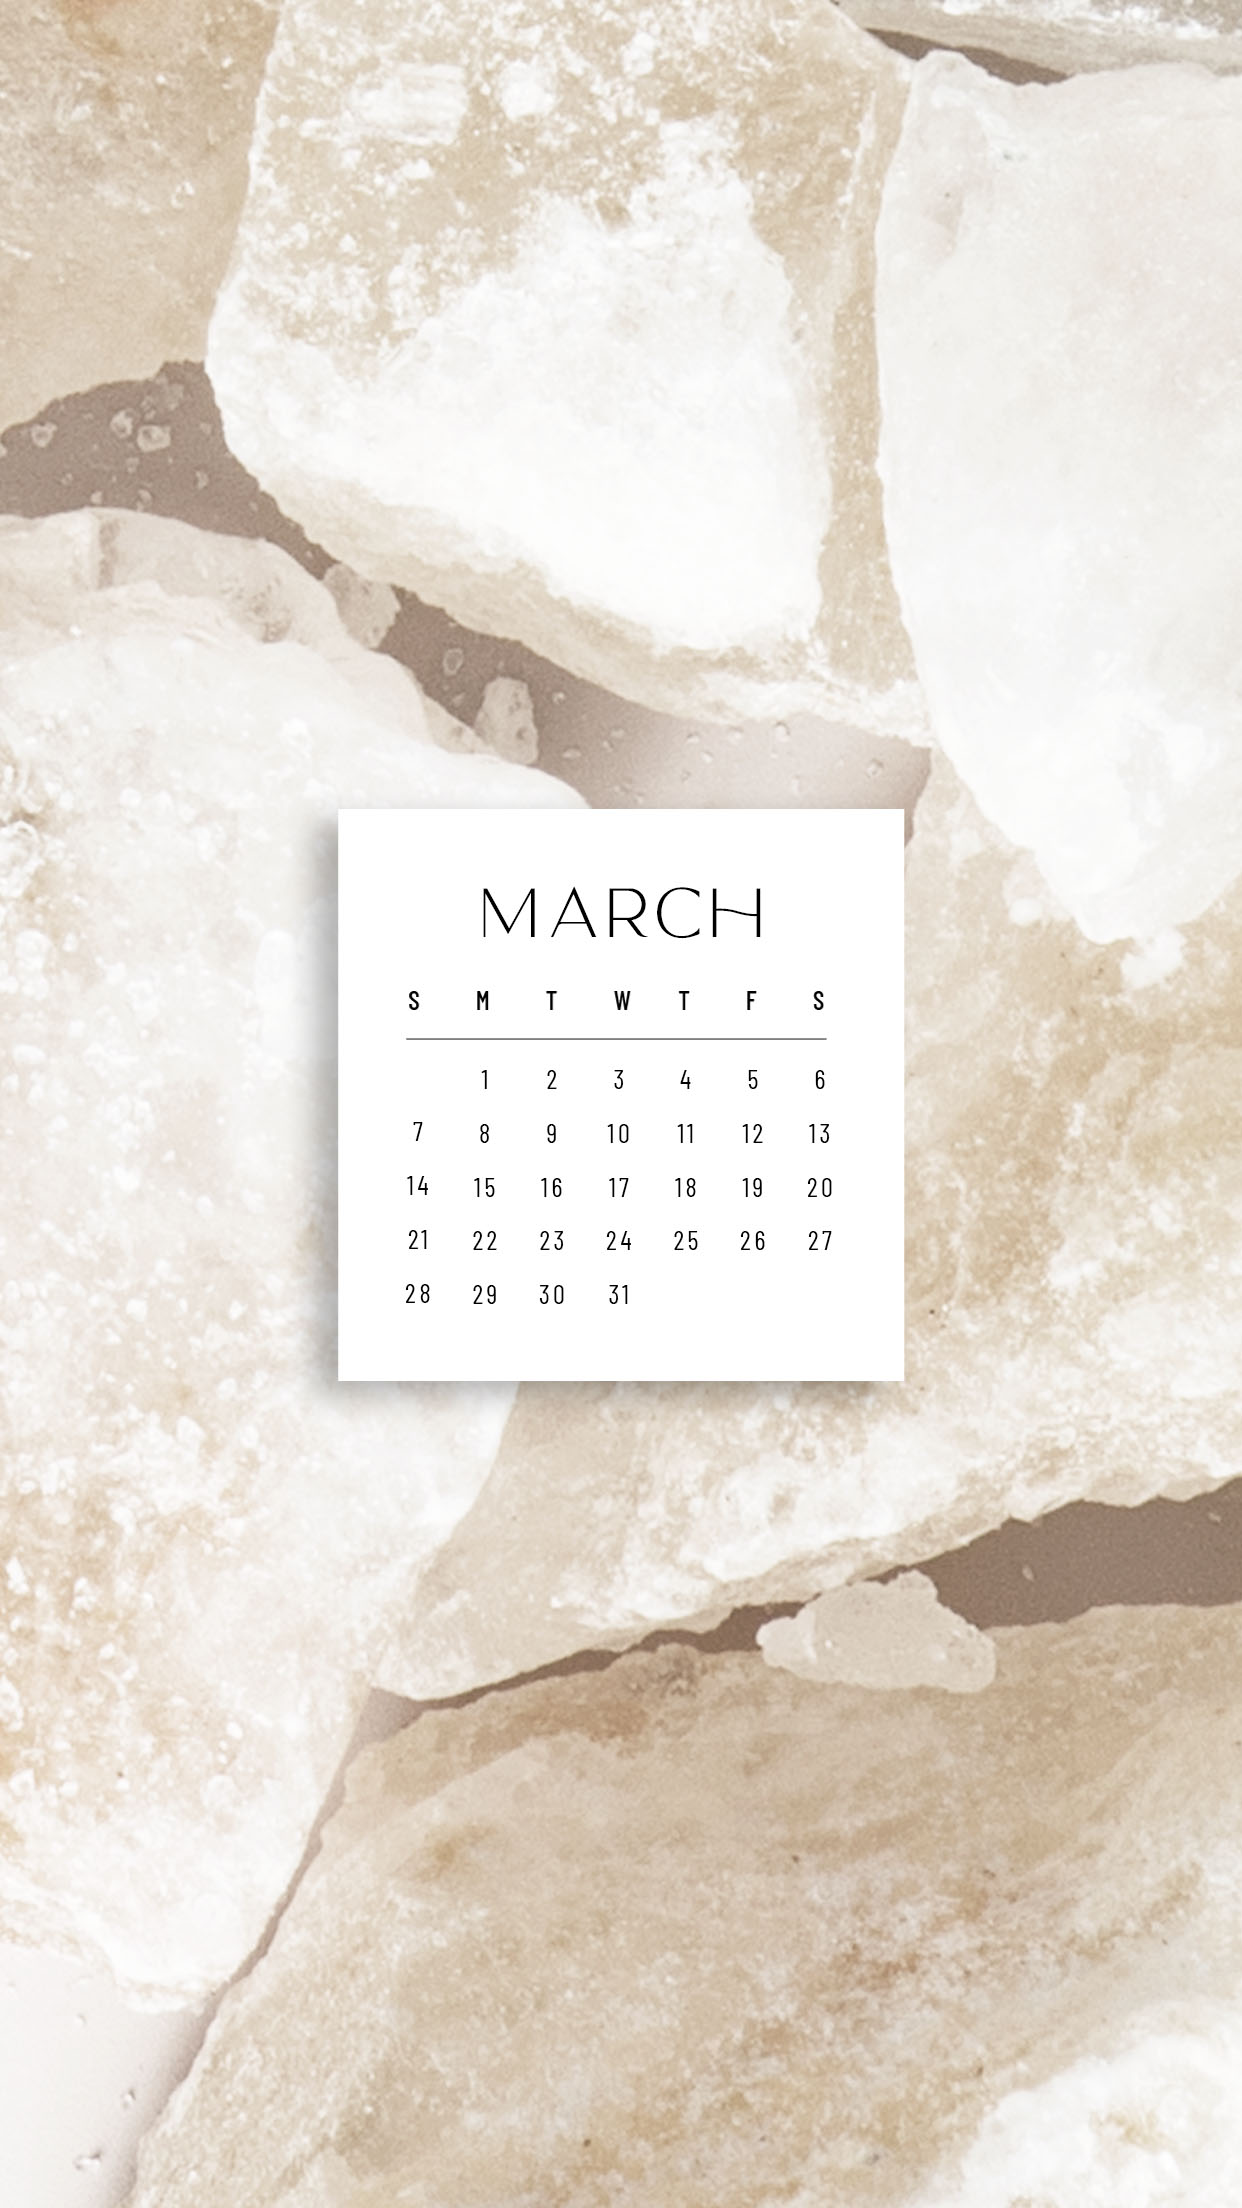 March 2021 Calendar Desktop and Mobile Wallpaper | Free | Sonrisa